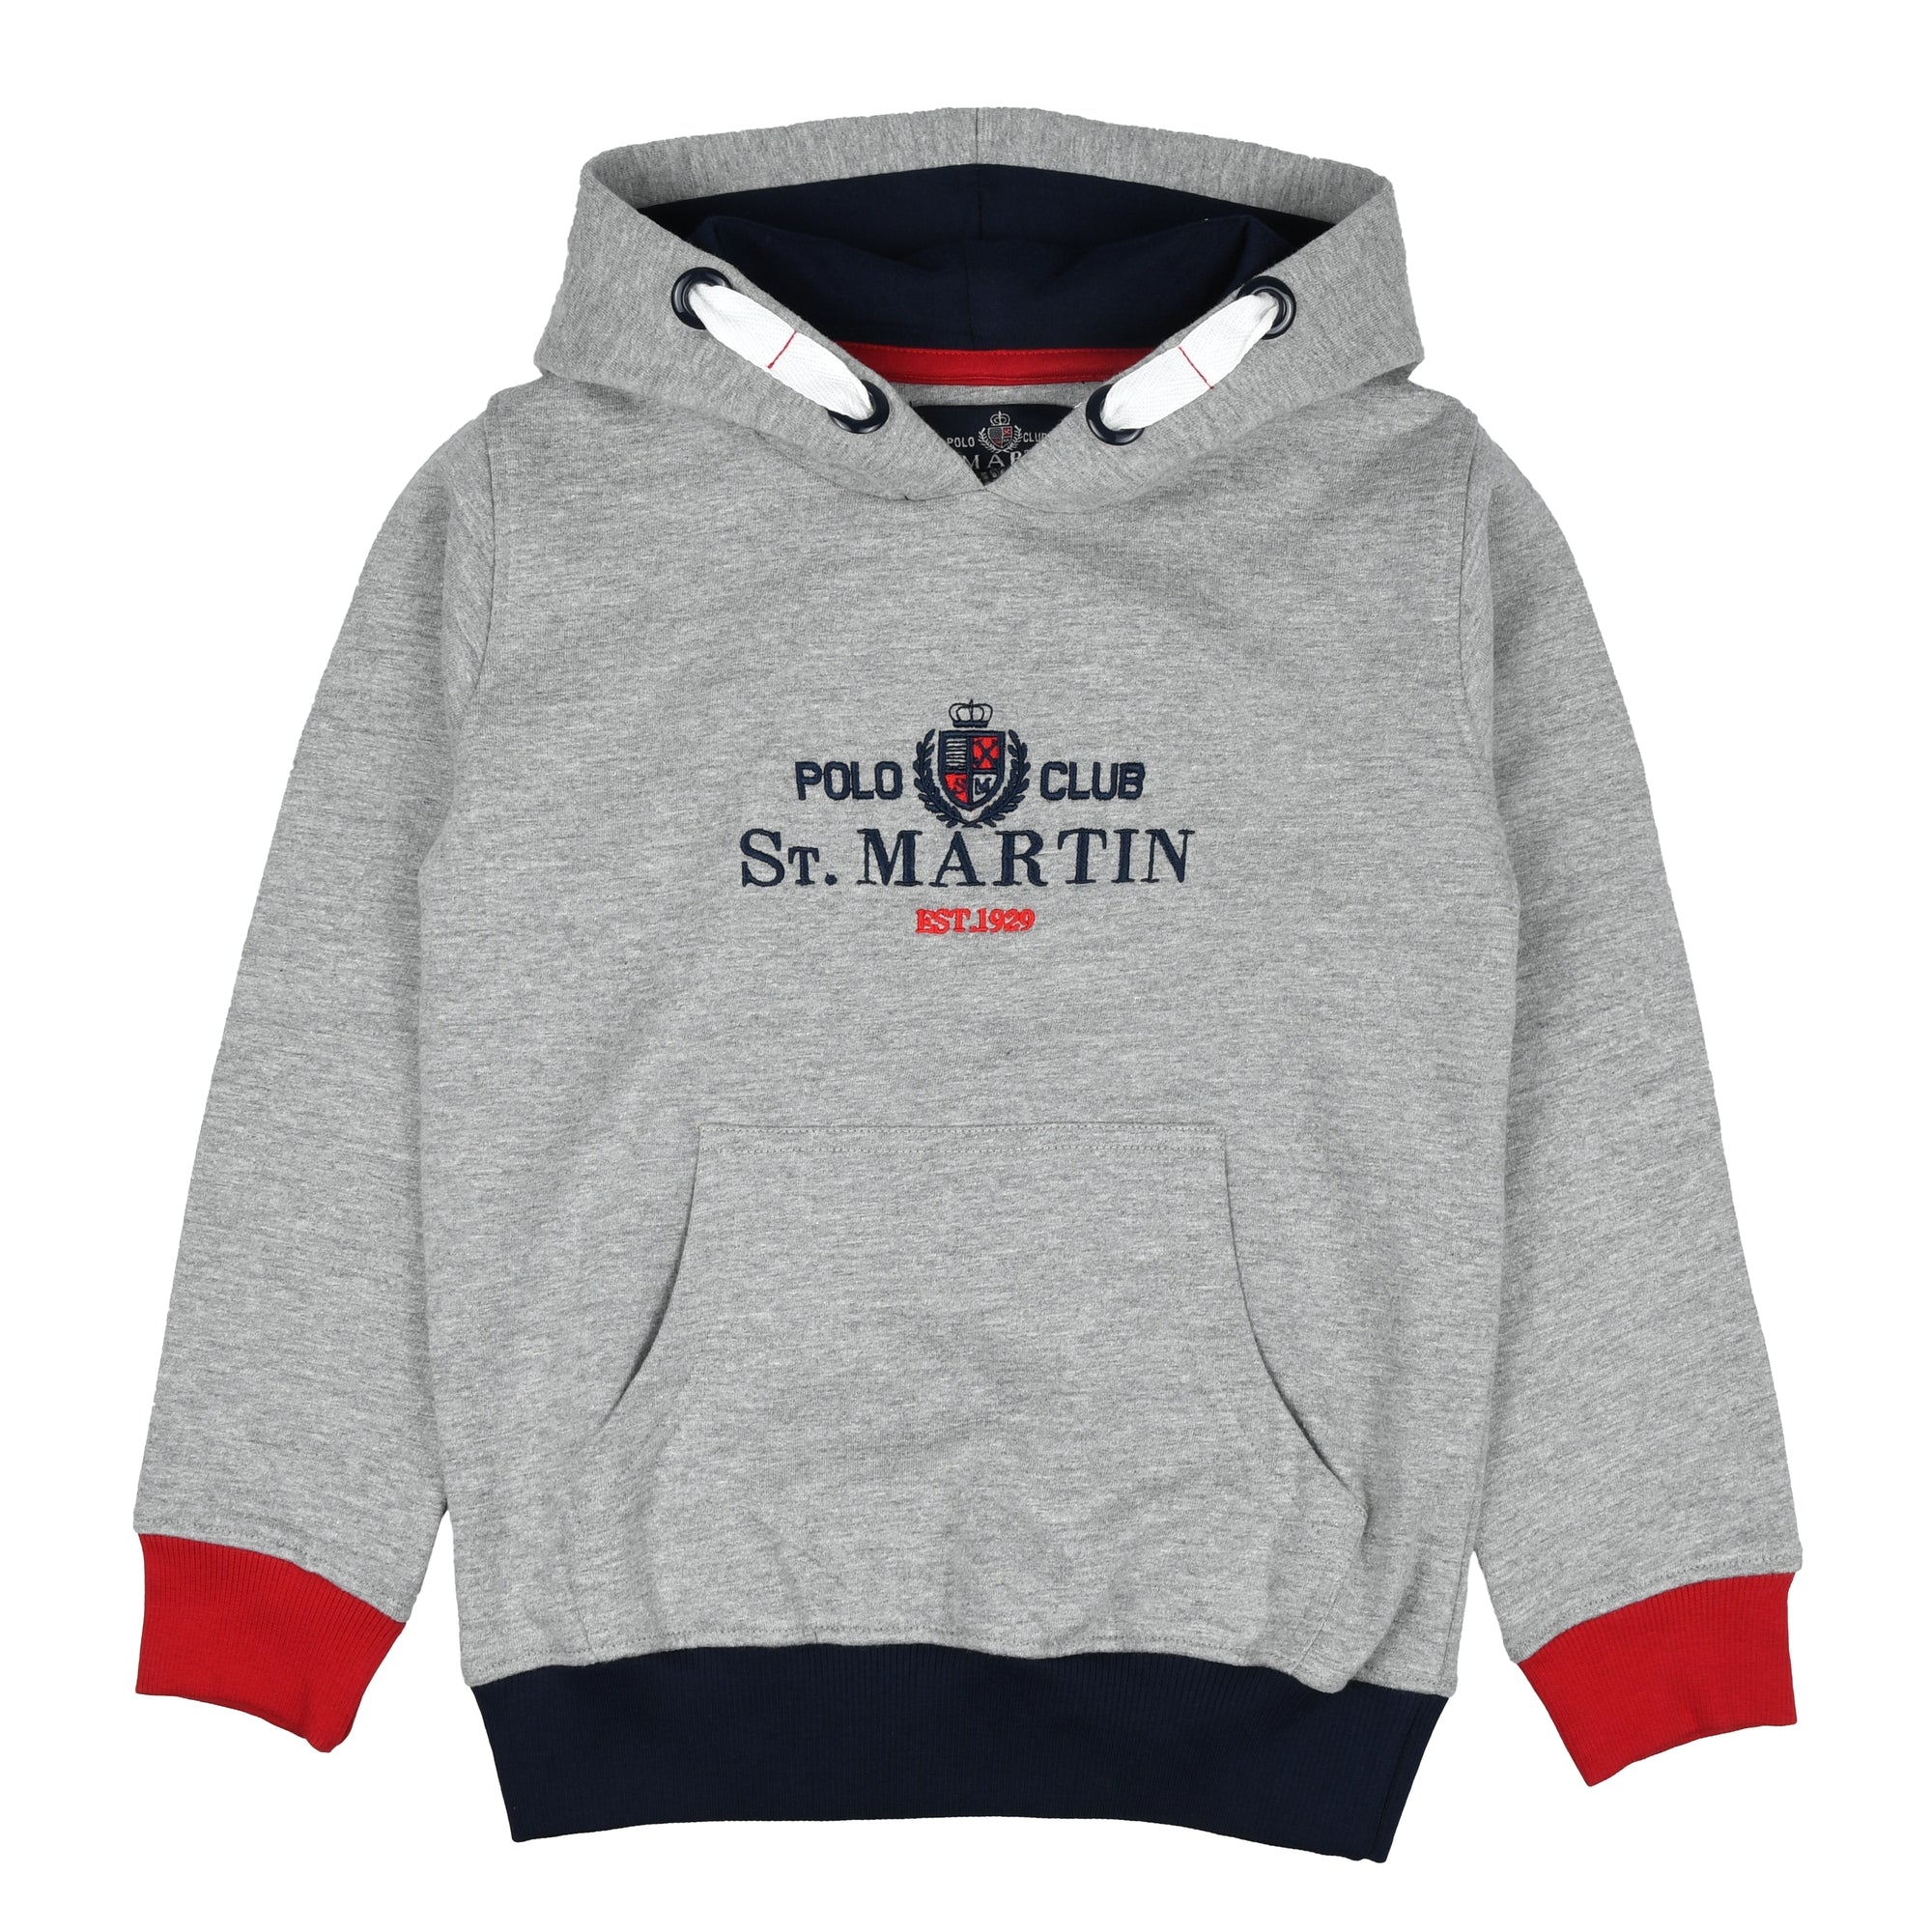 St. Martin sweatshirt with hood